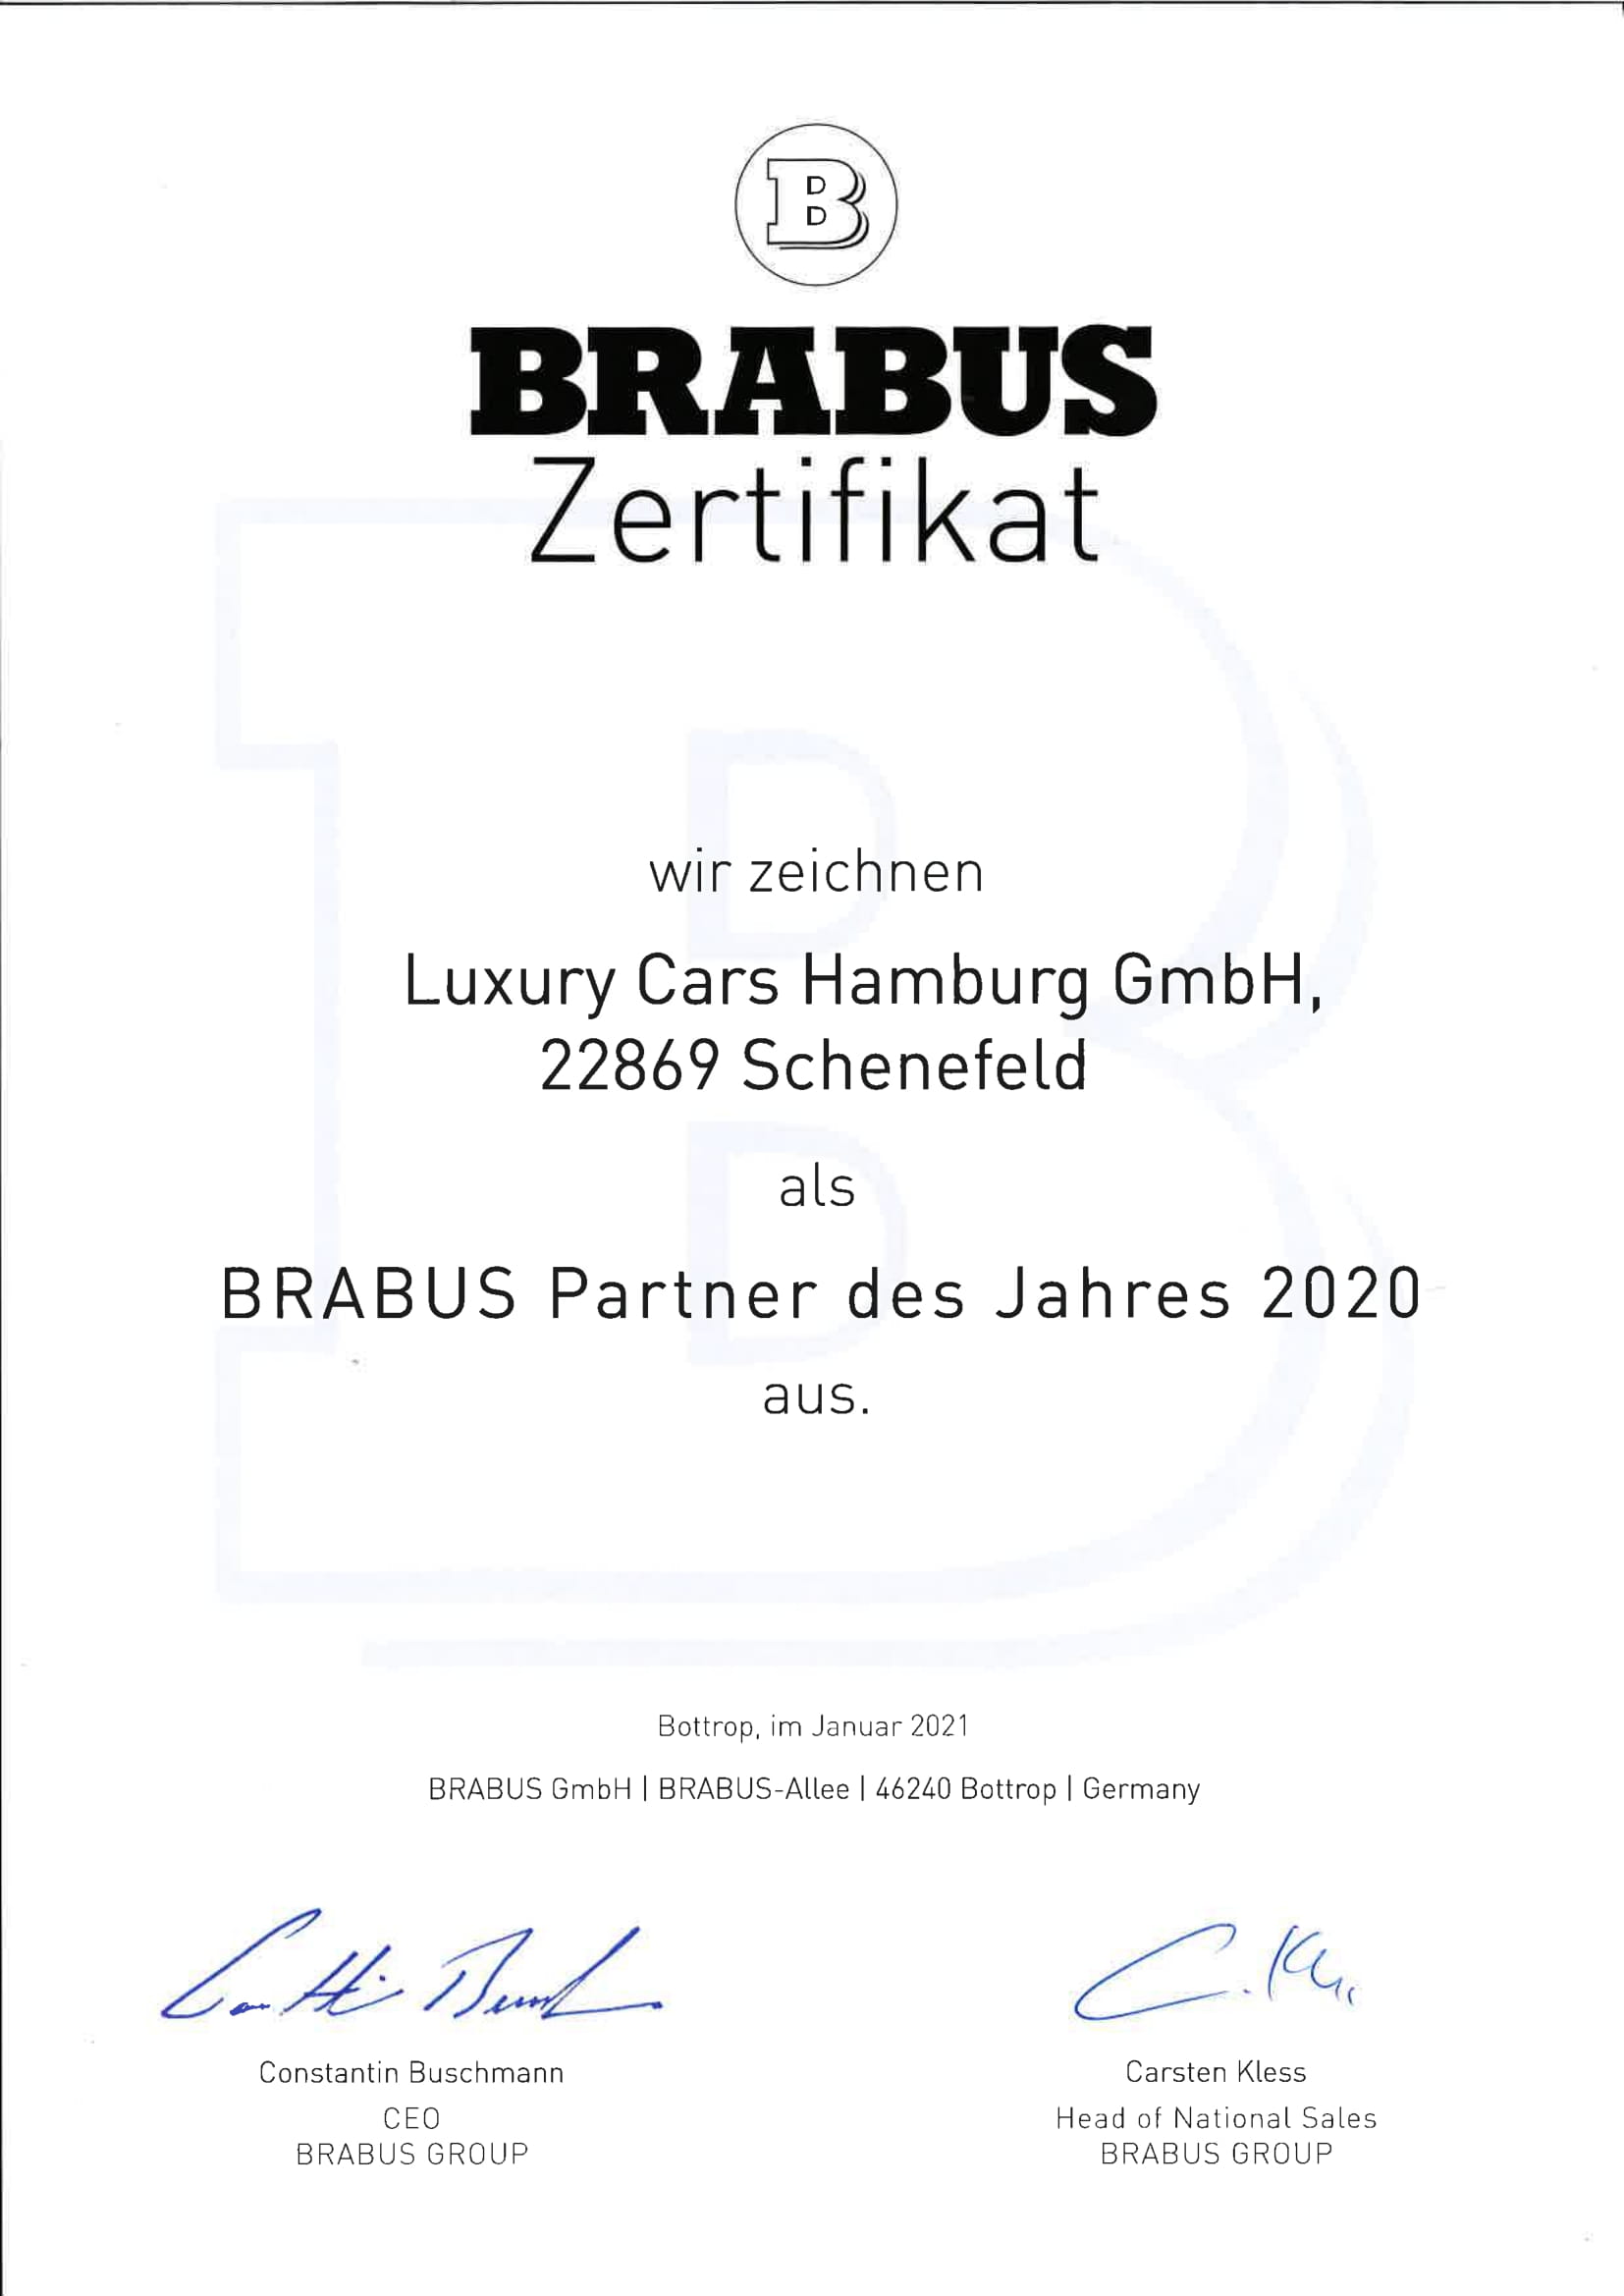 BRABUS partner of the year 2020